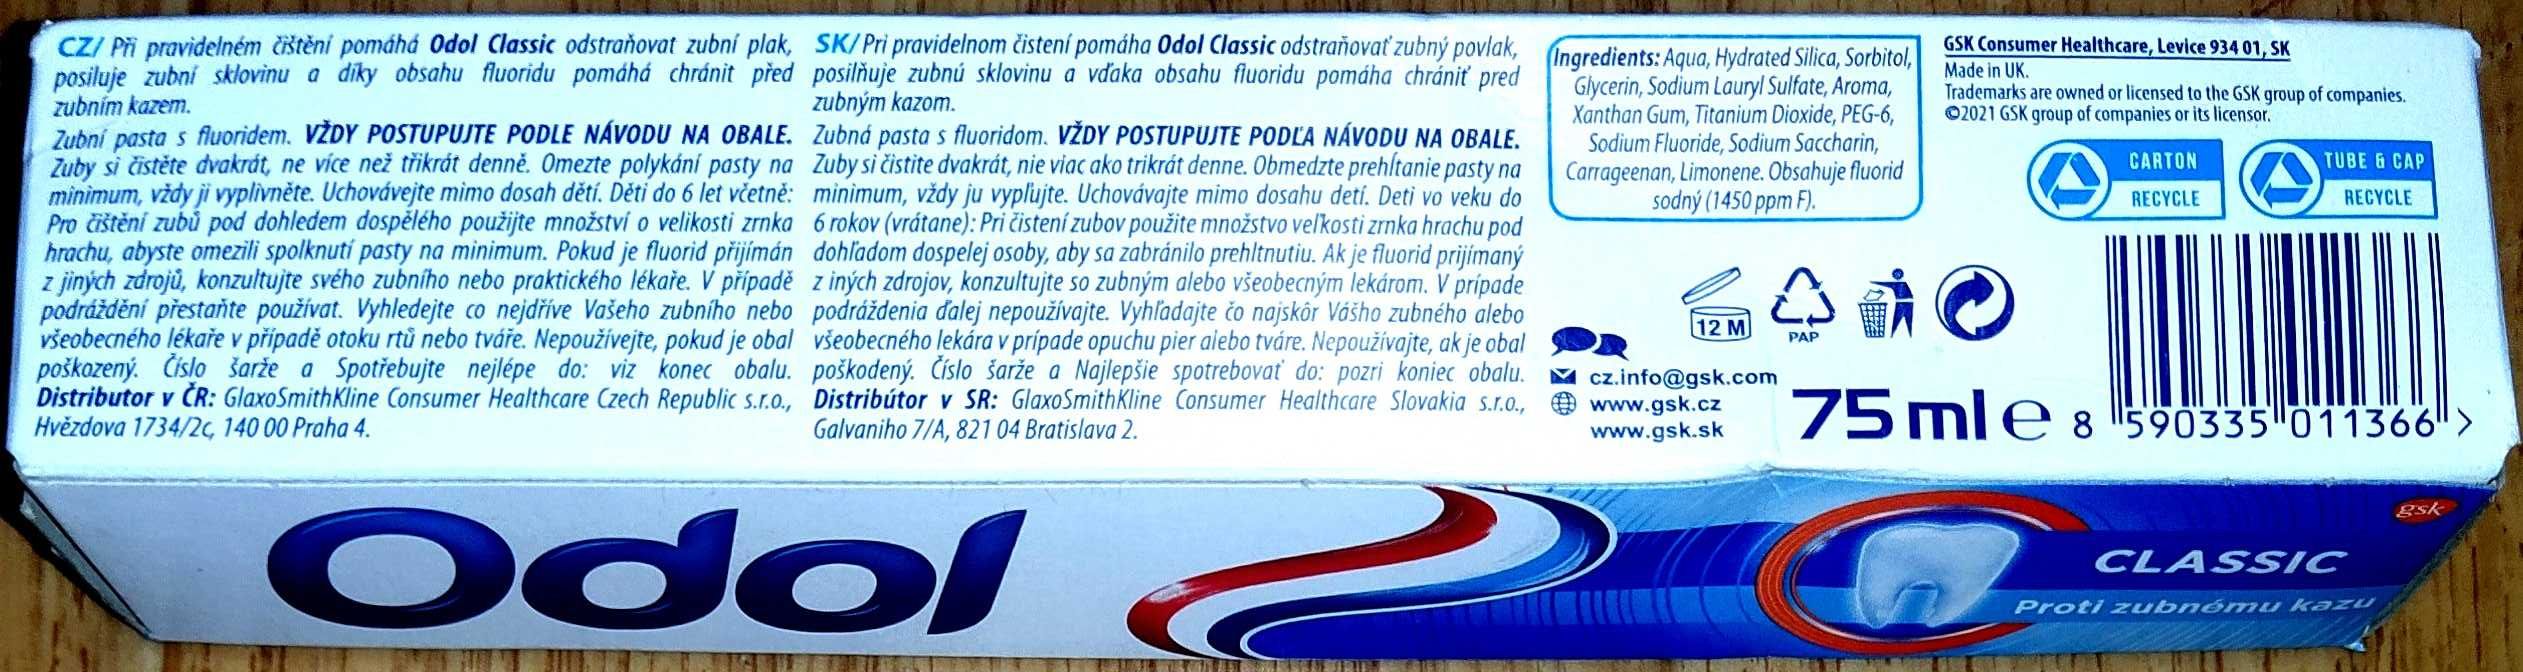 Зубная паста Odol Classic 75 ml против кариеса Великобритания